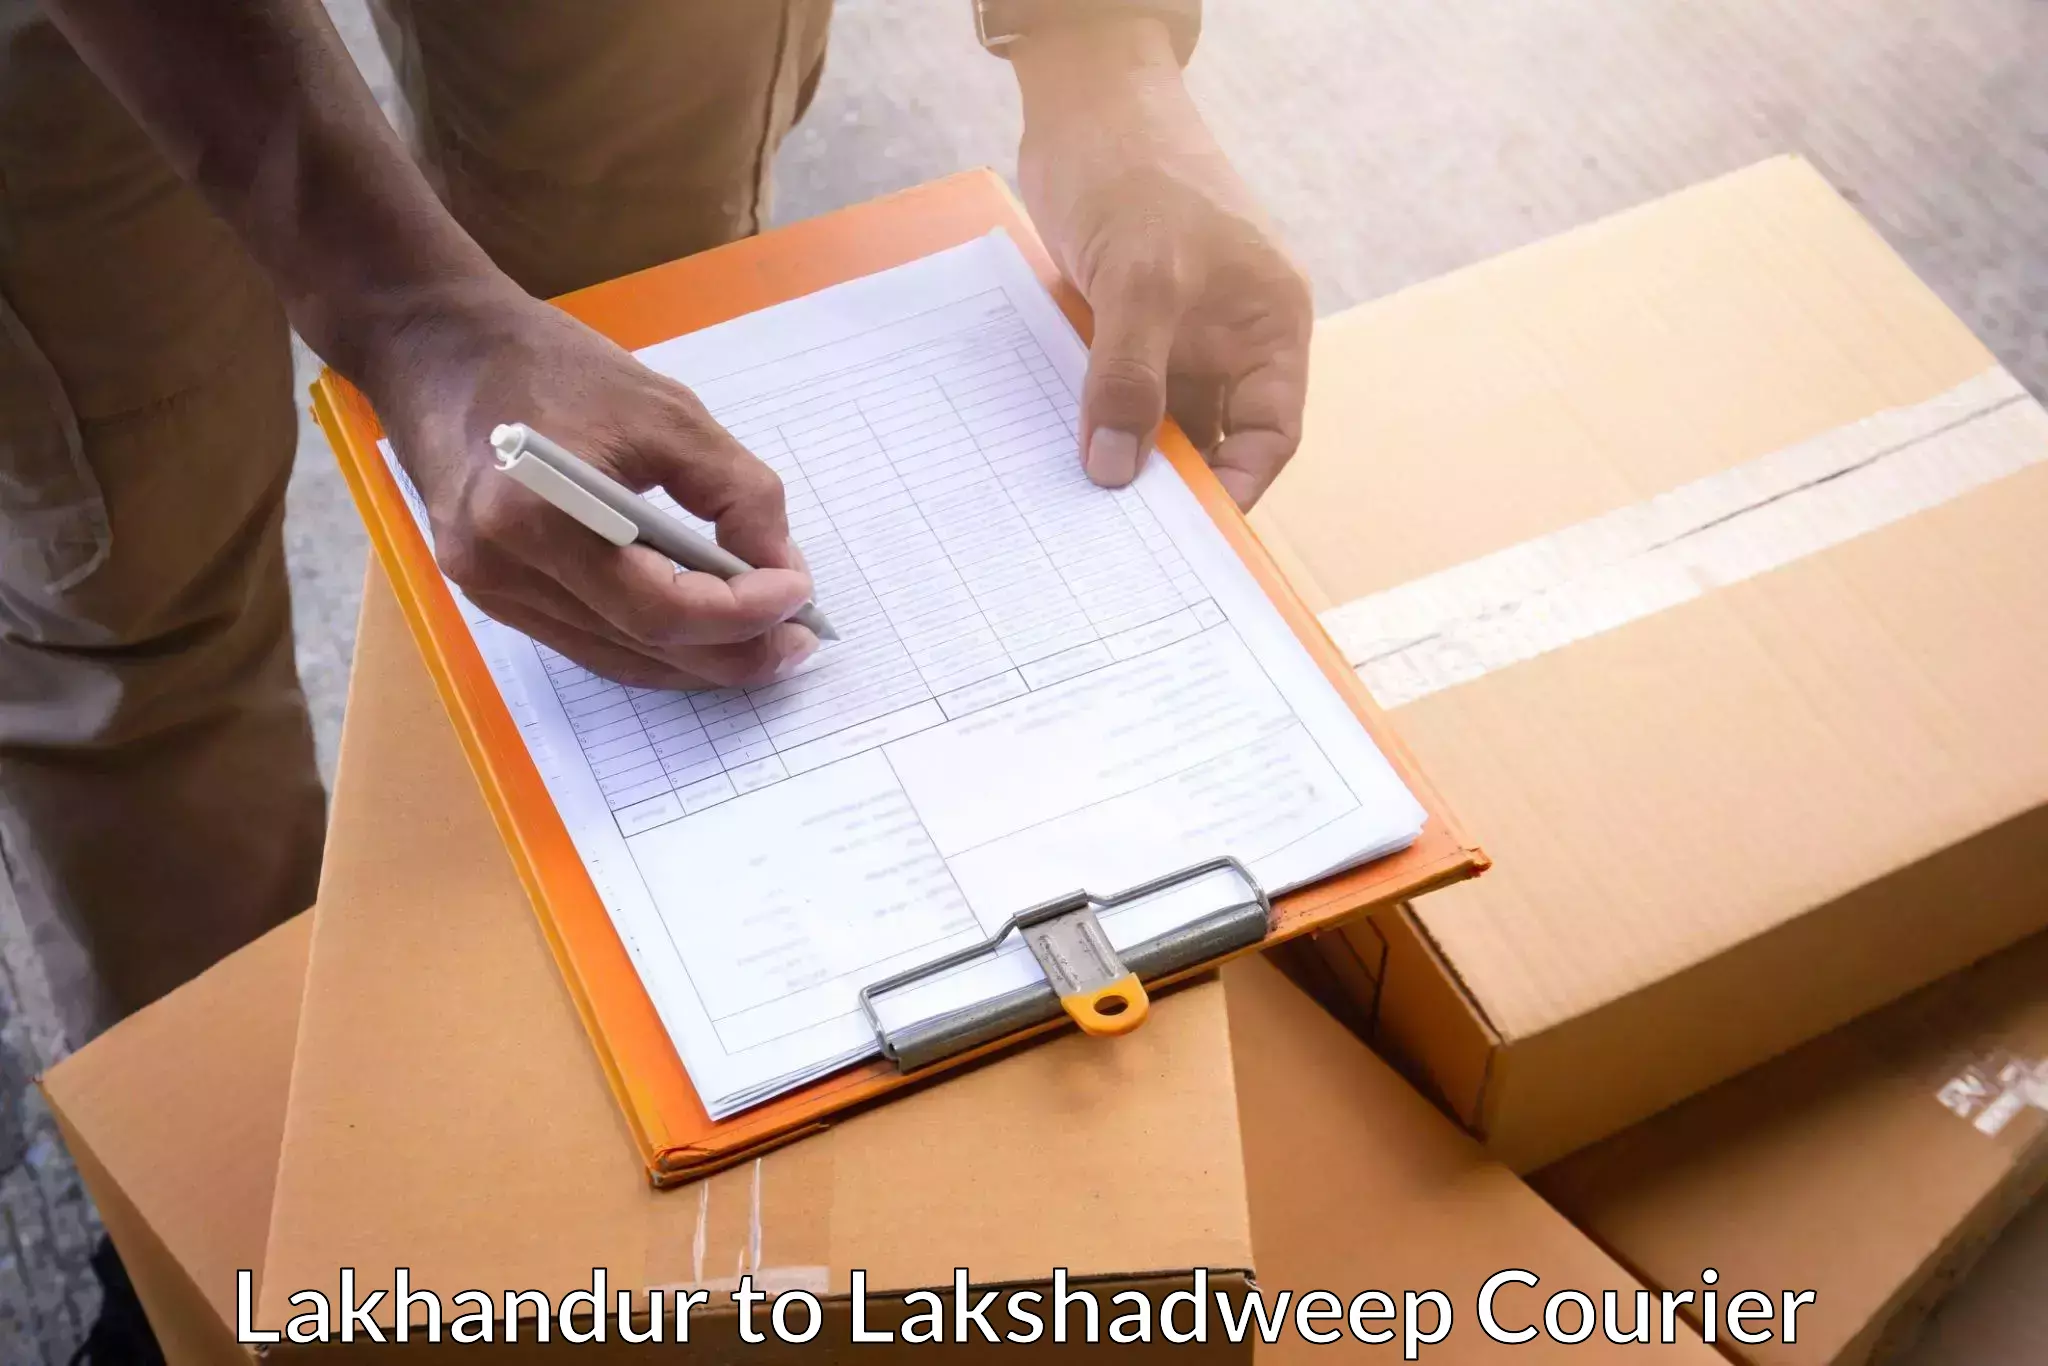 High-performance logistics Lakhandur to Lakshadweep